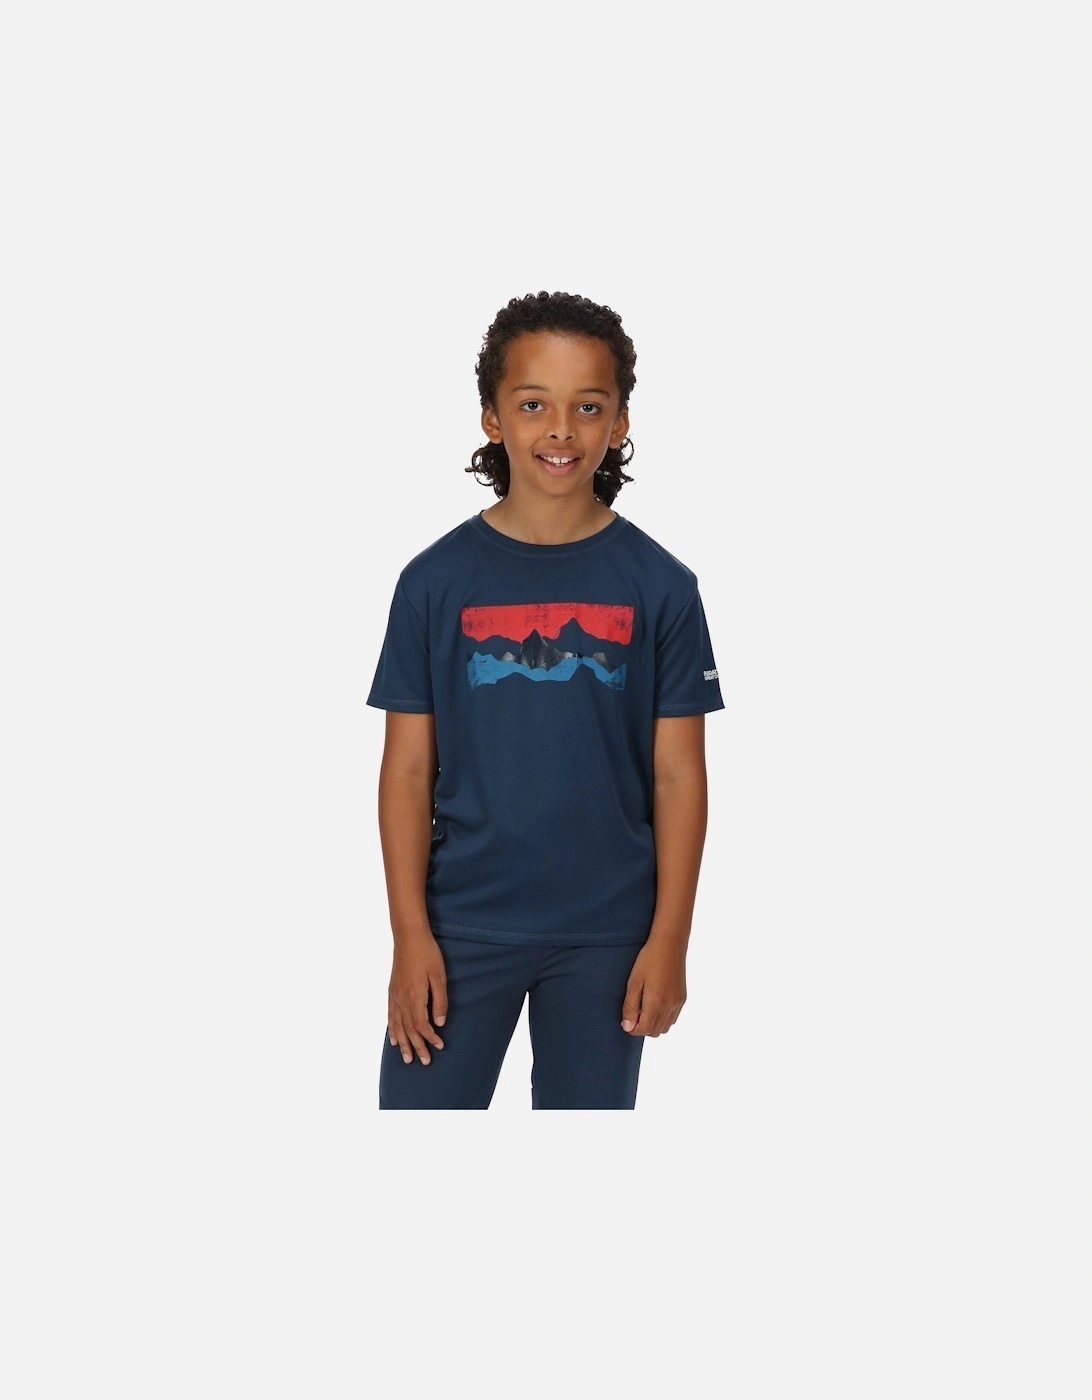 Childrens/Kids Alvarado VI Mountain T-Shirt